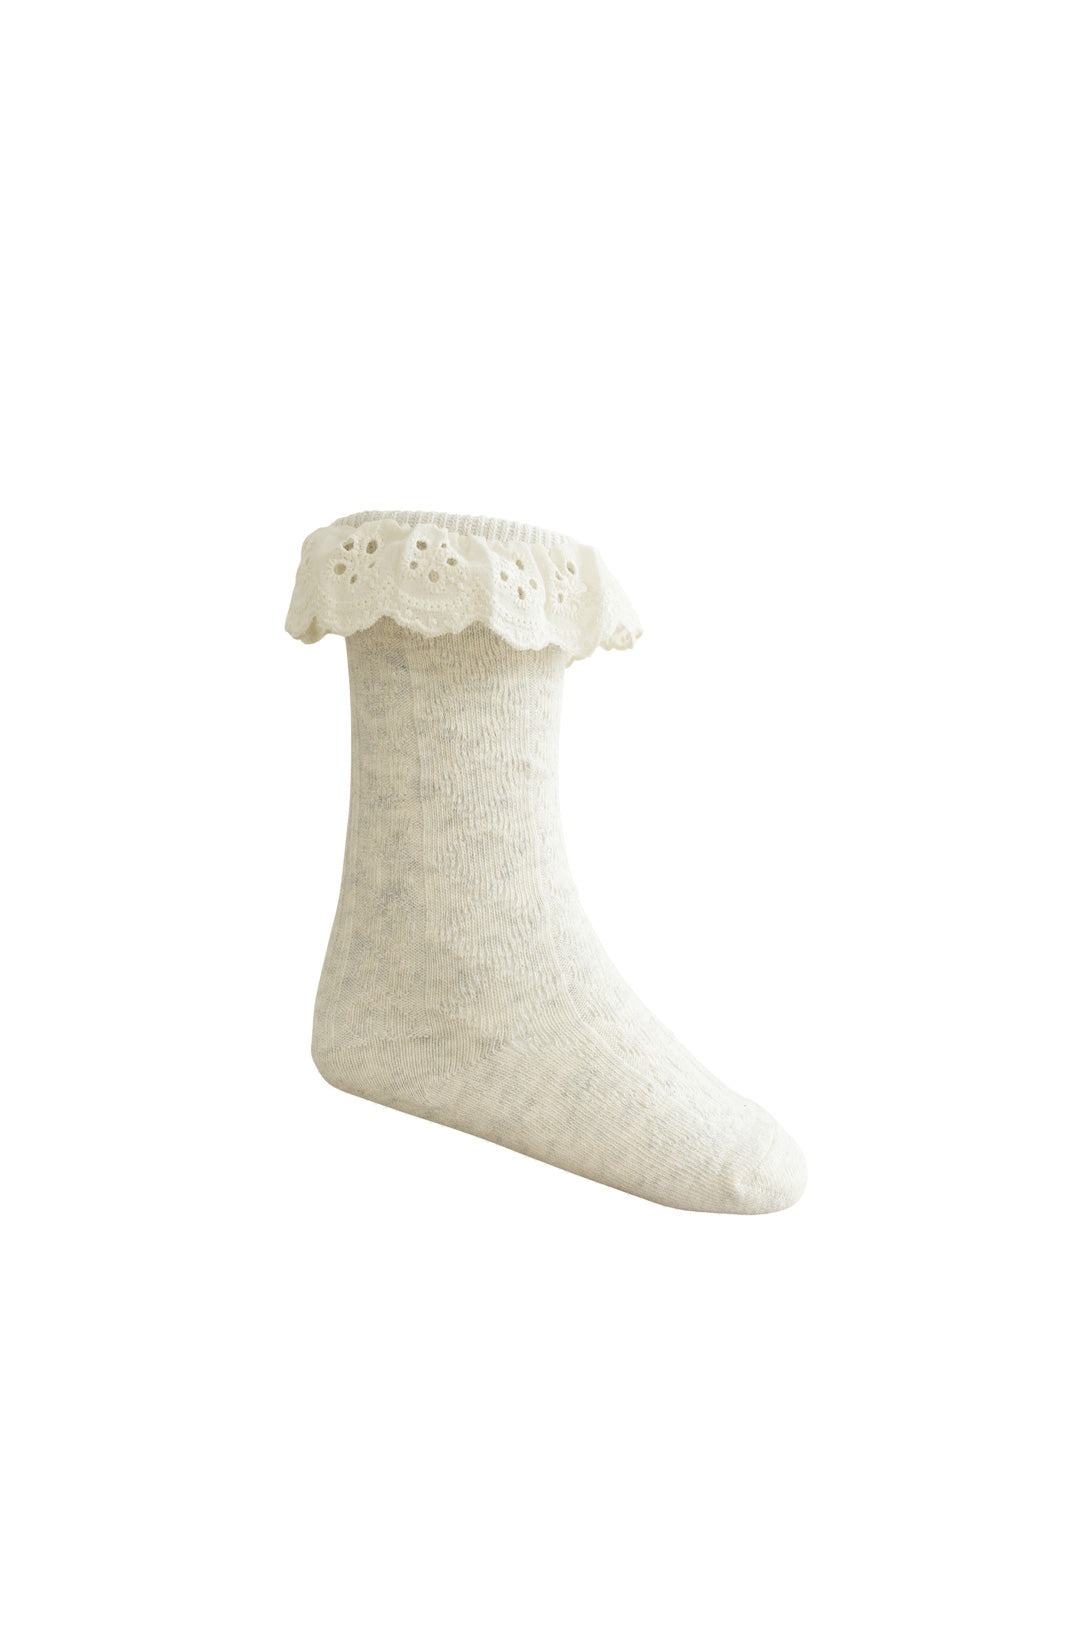 Pointelle Ankle High Sock - Oatmeal Childrens Socks from Jamie Kay NZ